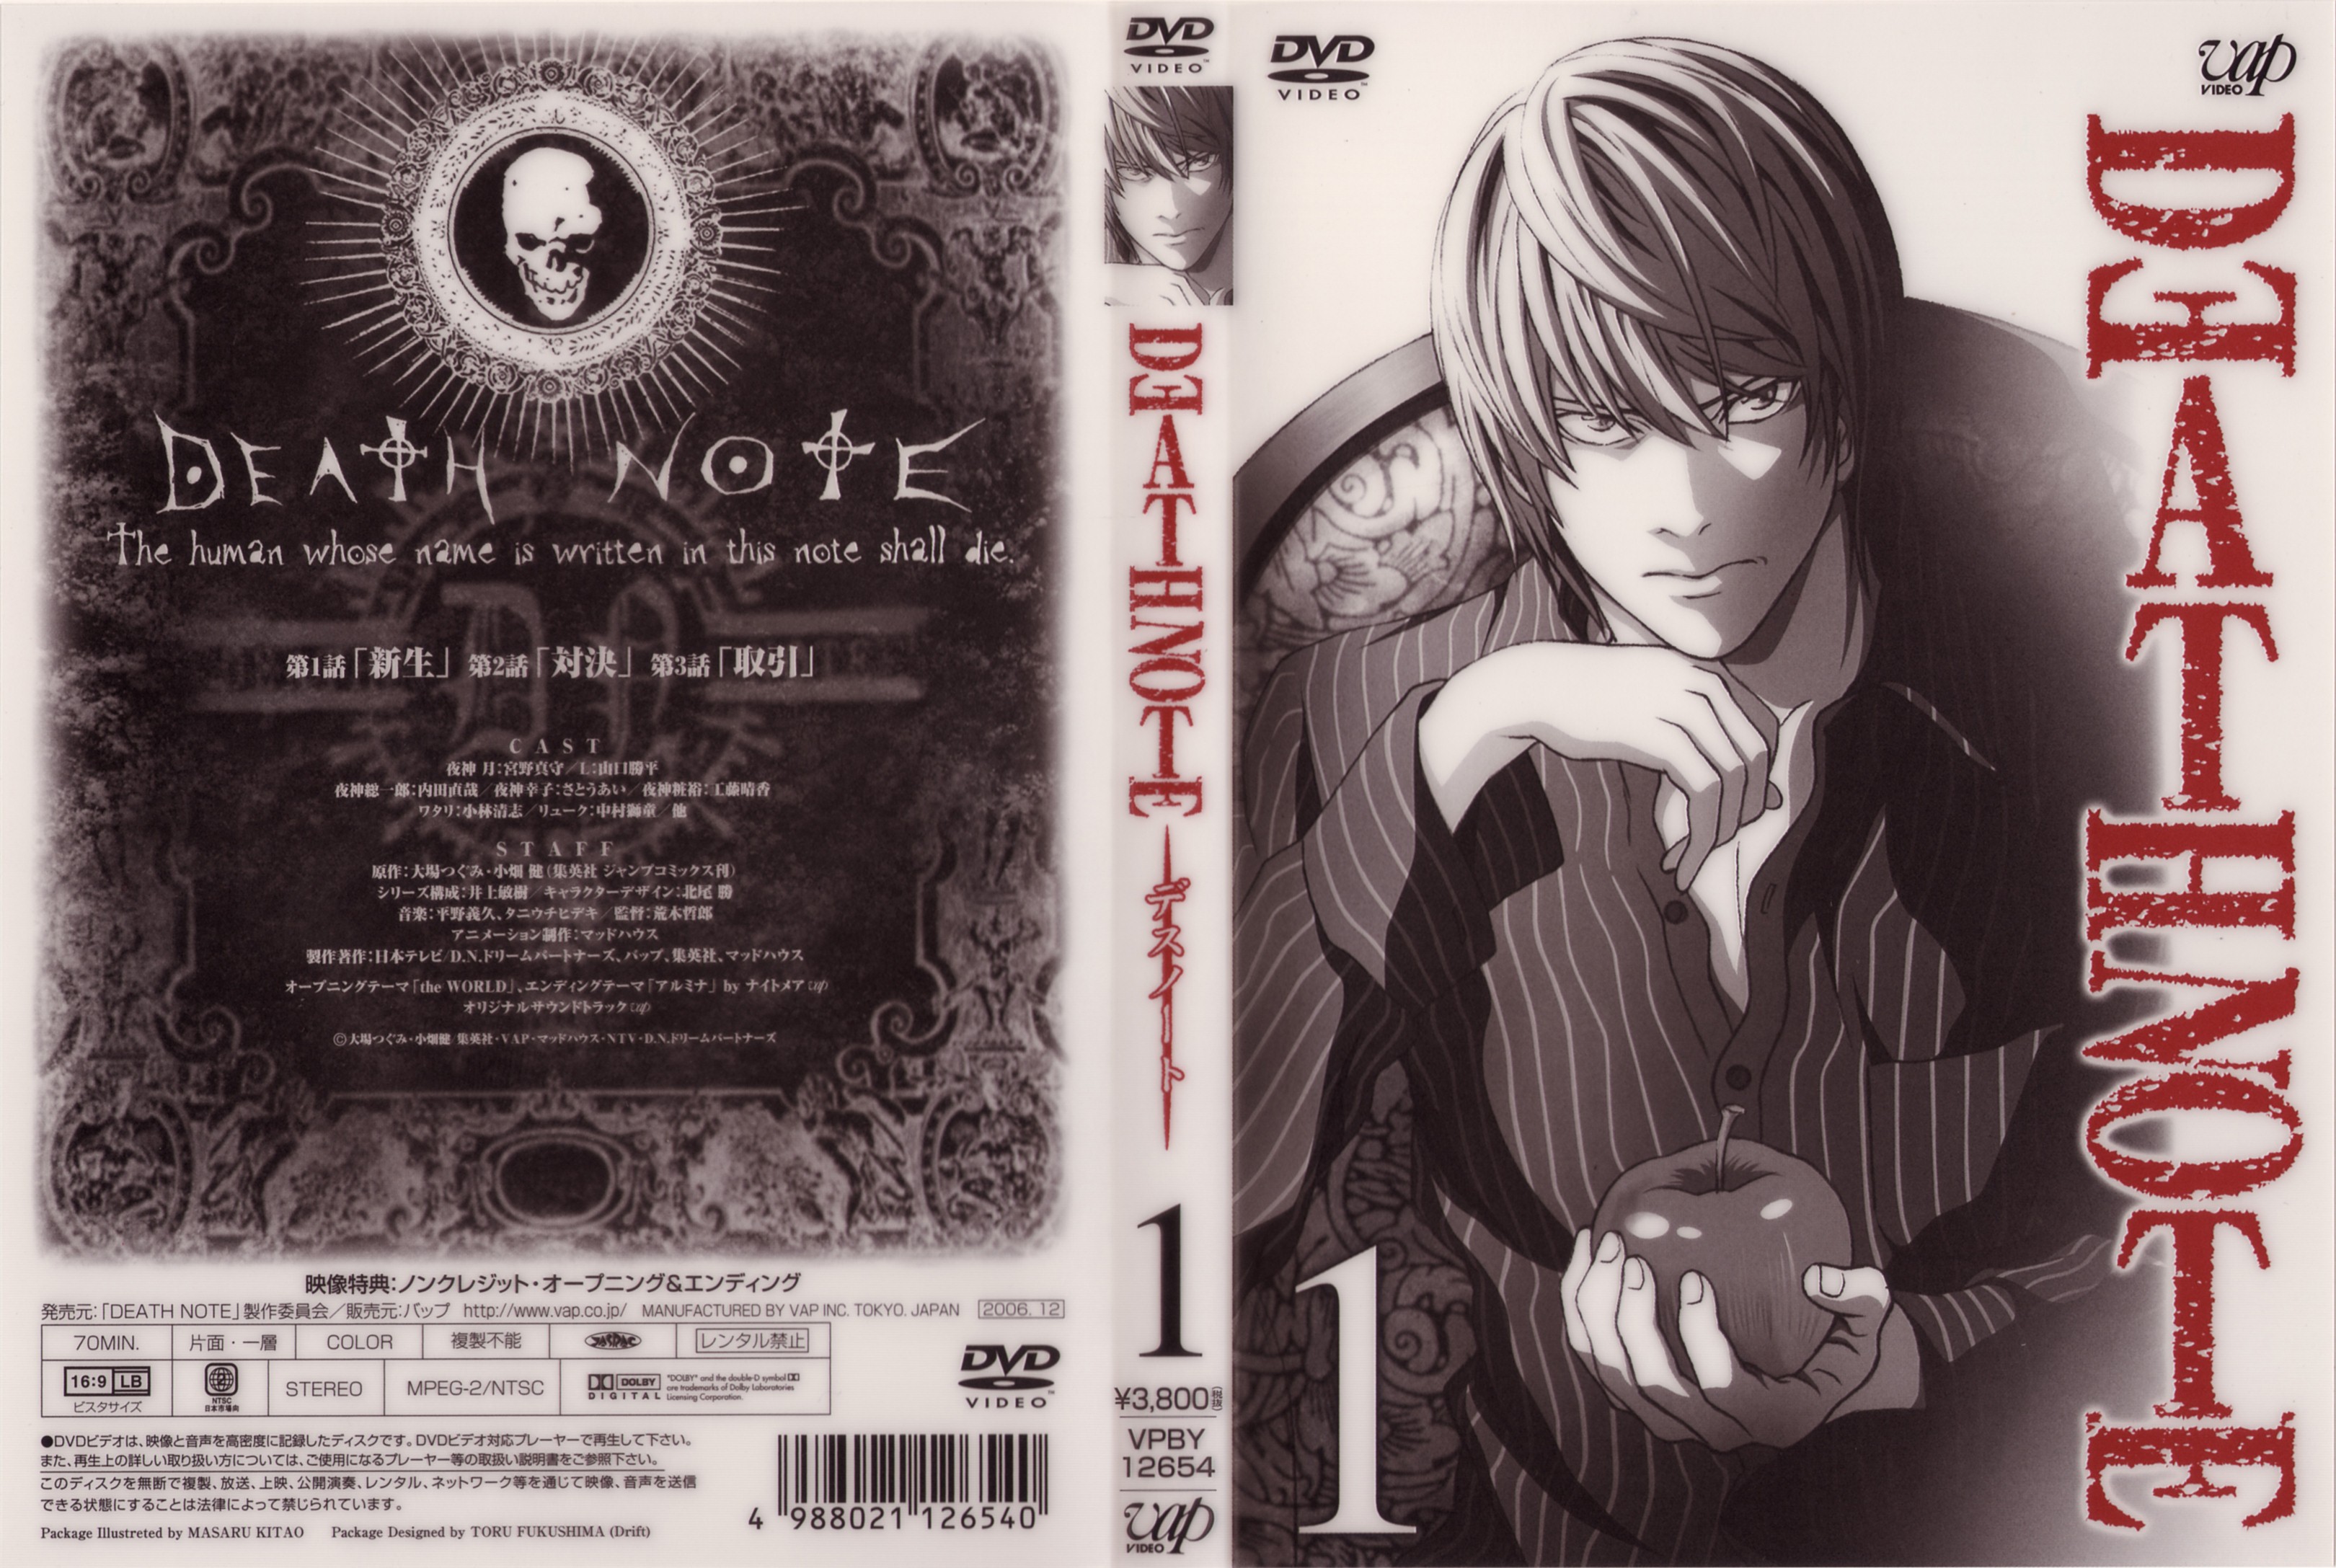 Jaquette DVD Death Note vol 1